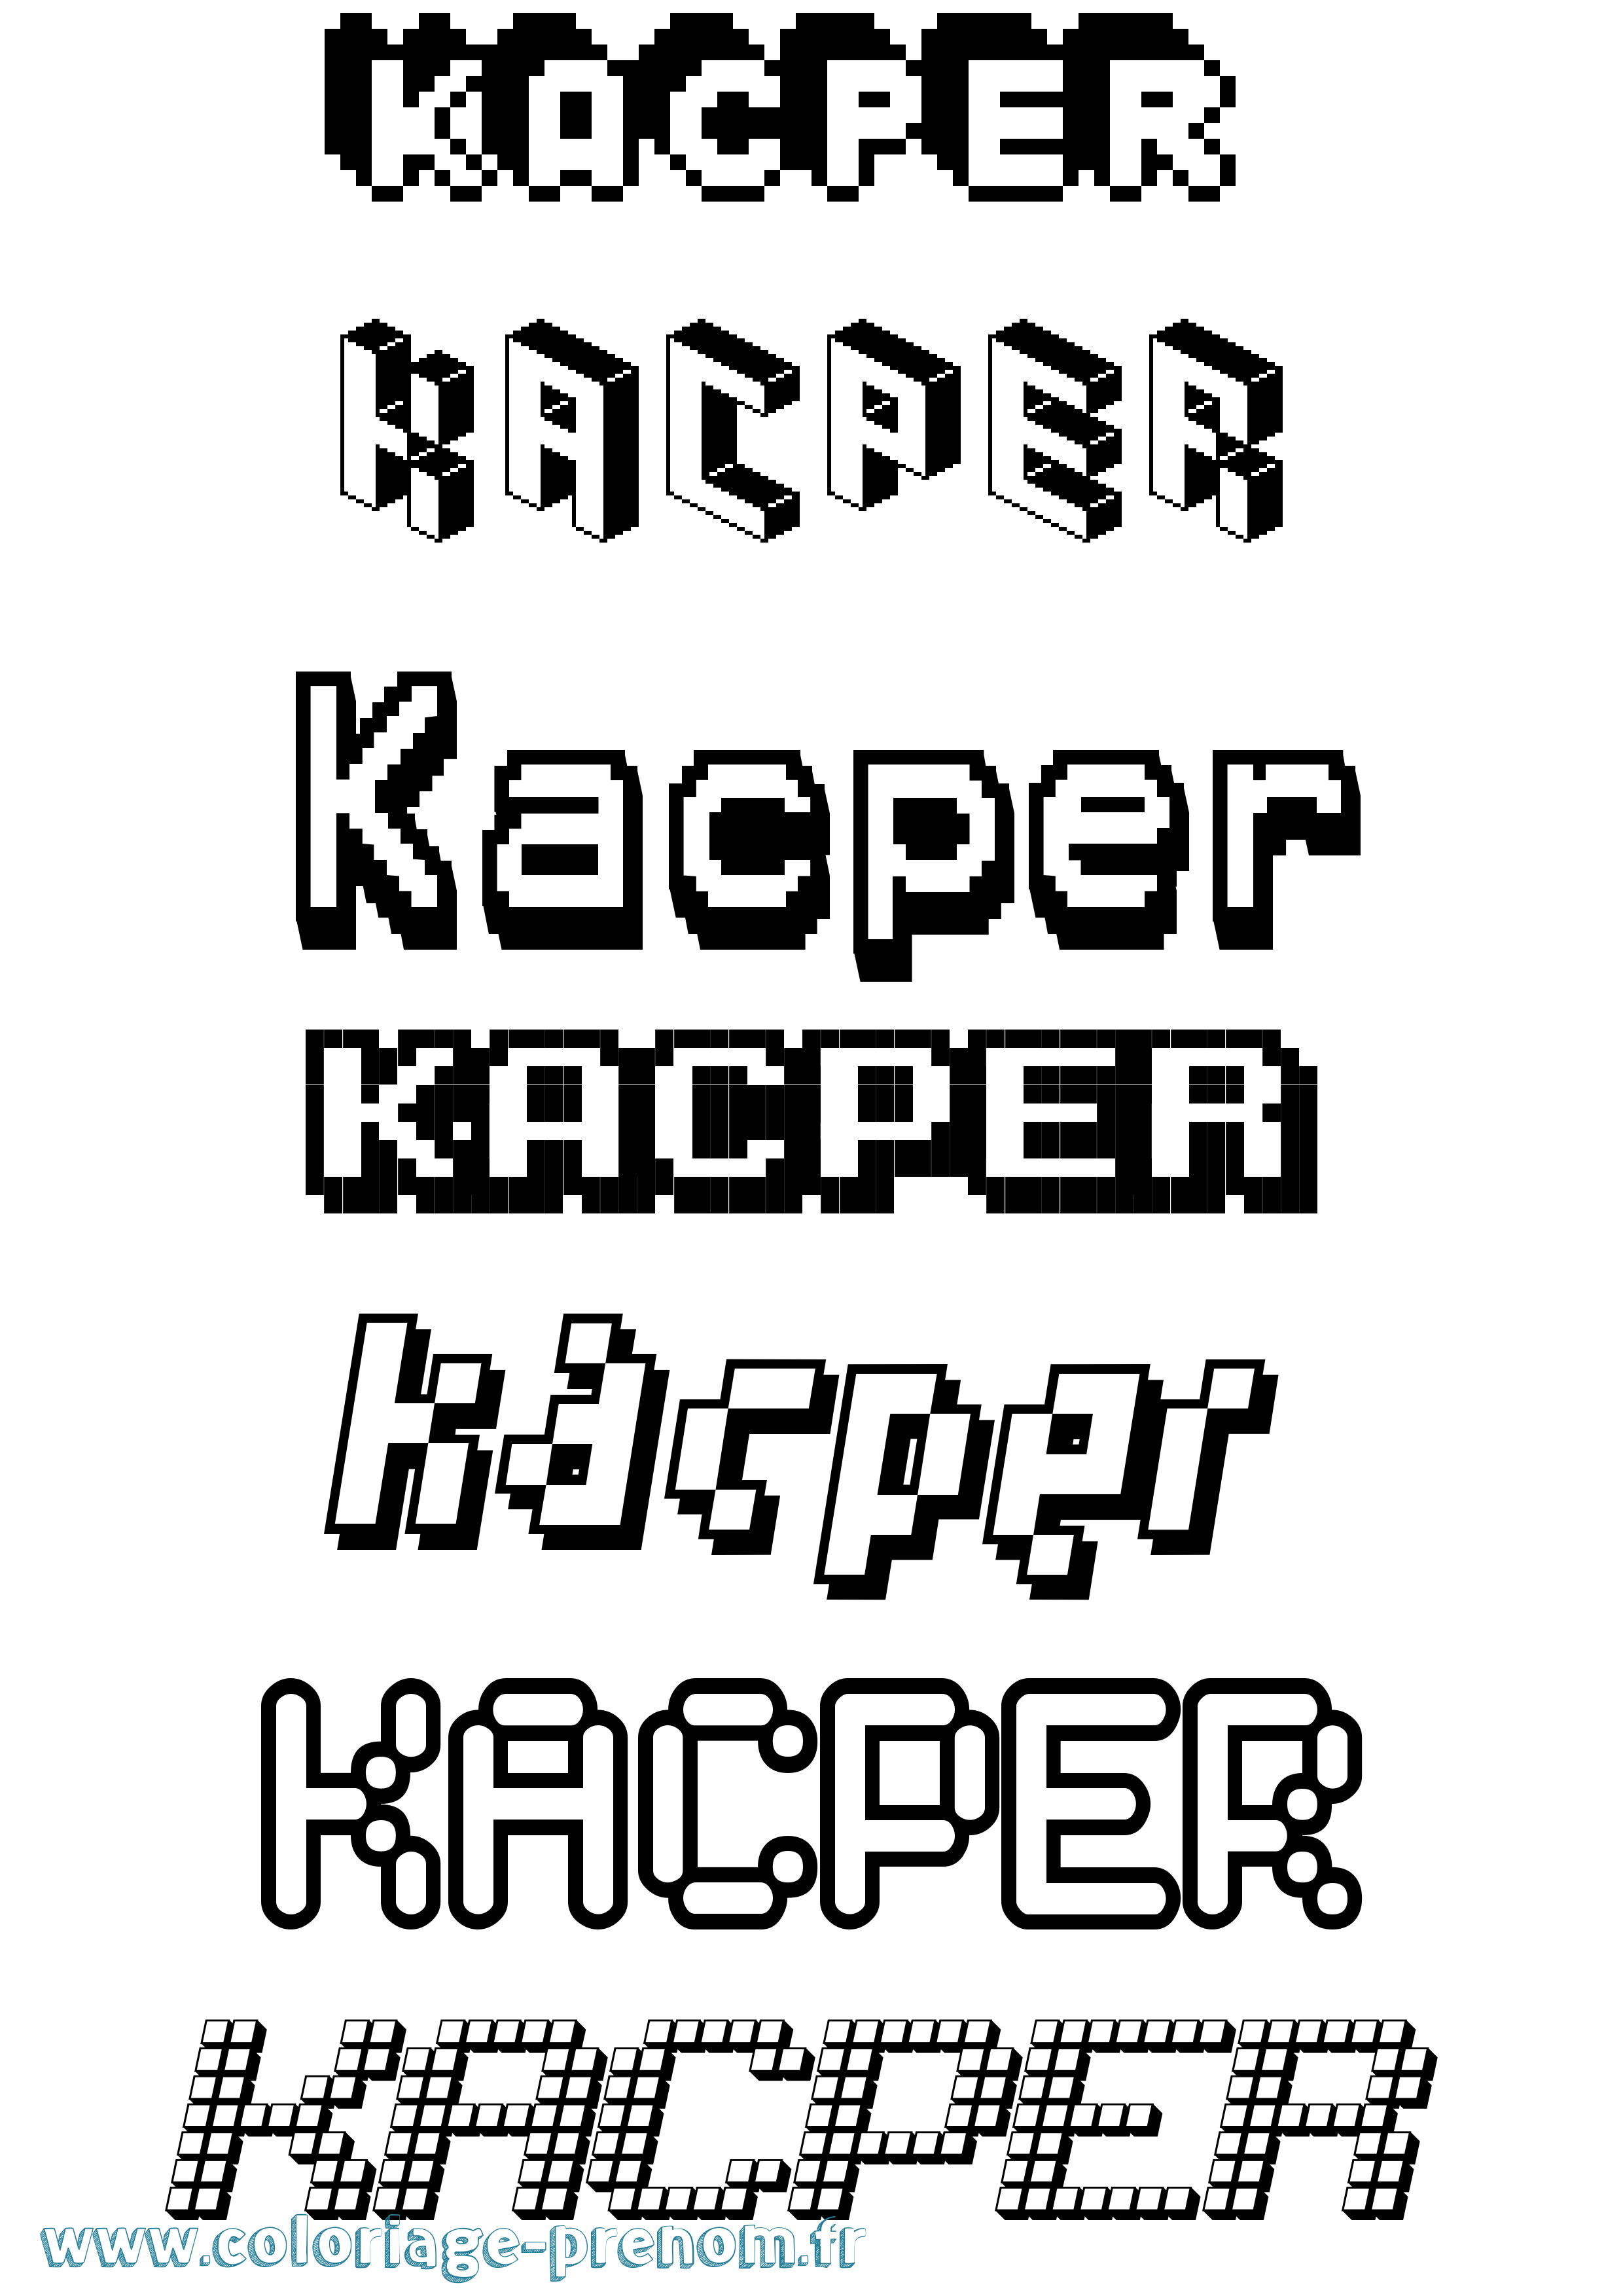 Coloriage prénom Kacper